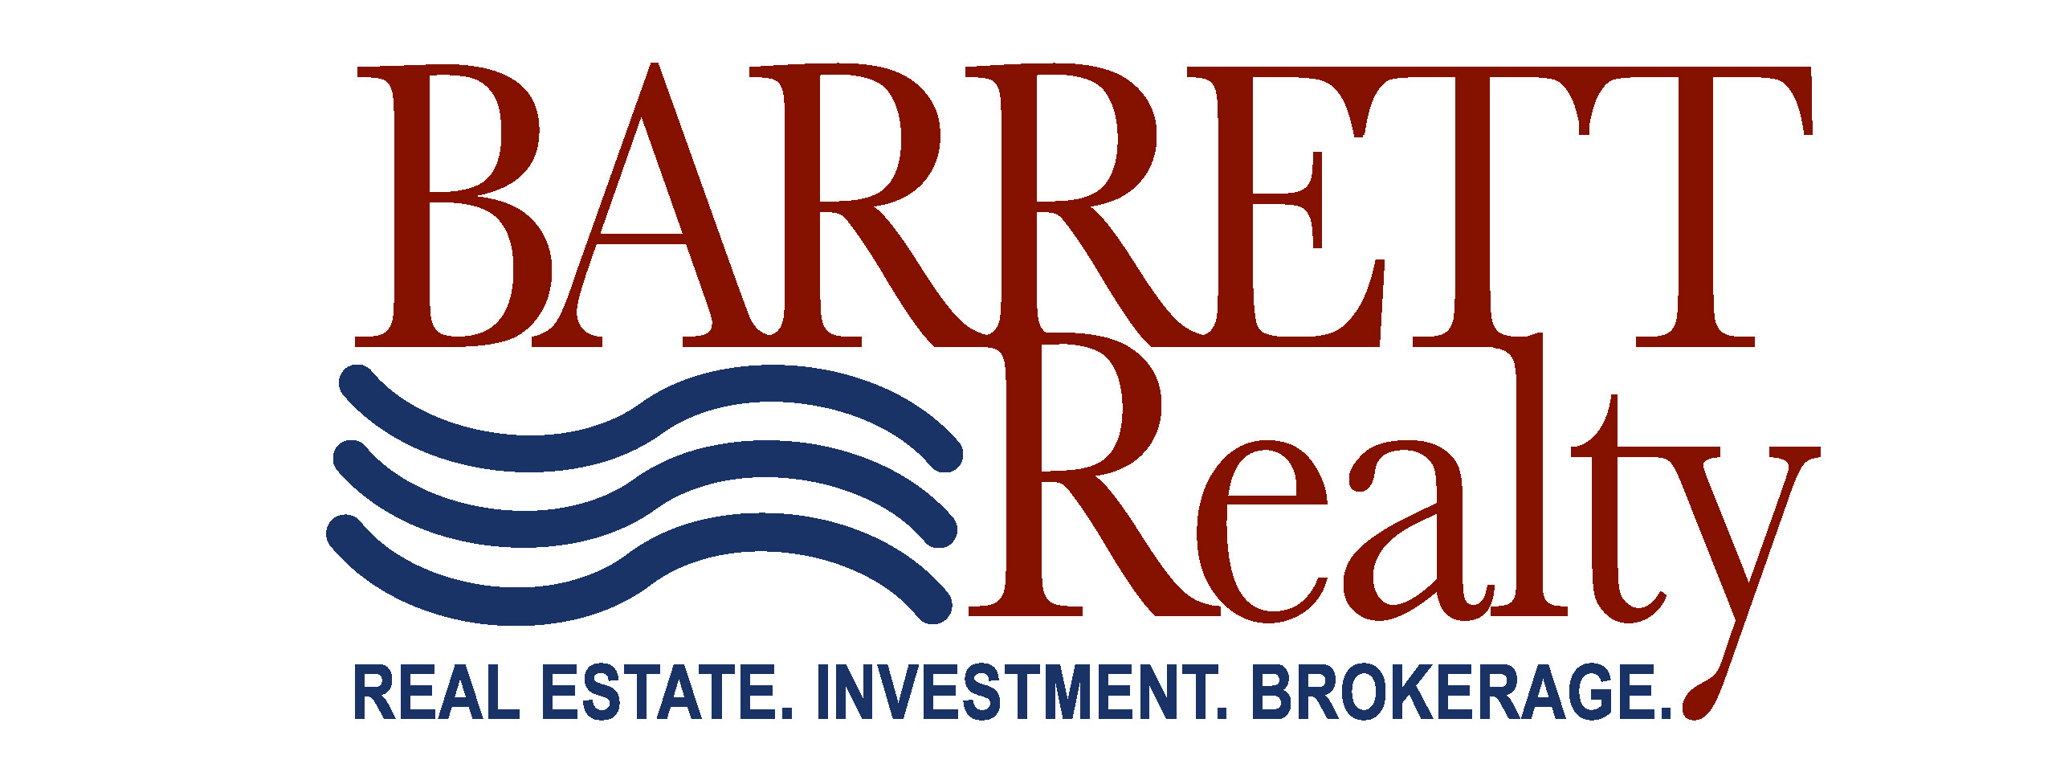 Barrett Realty, Inc.